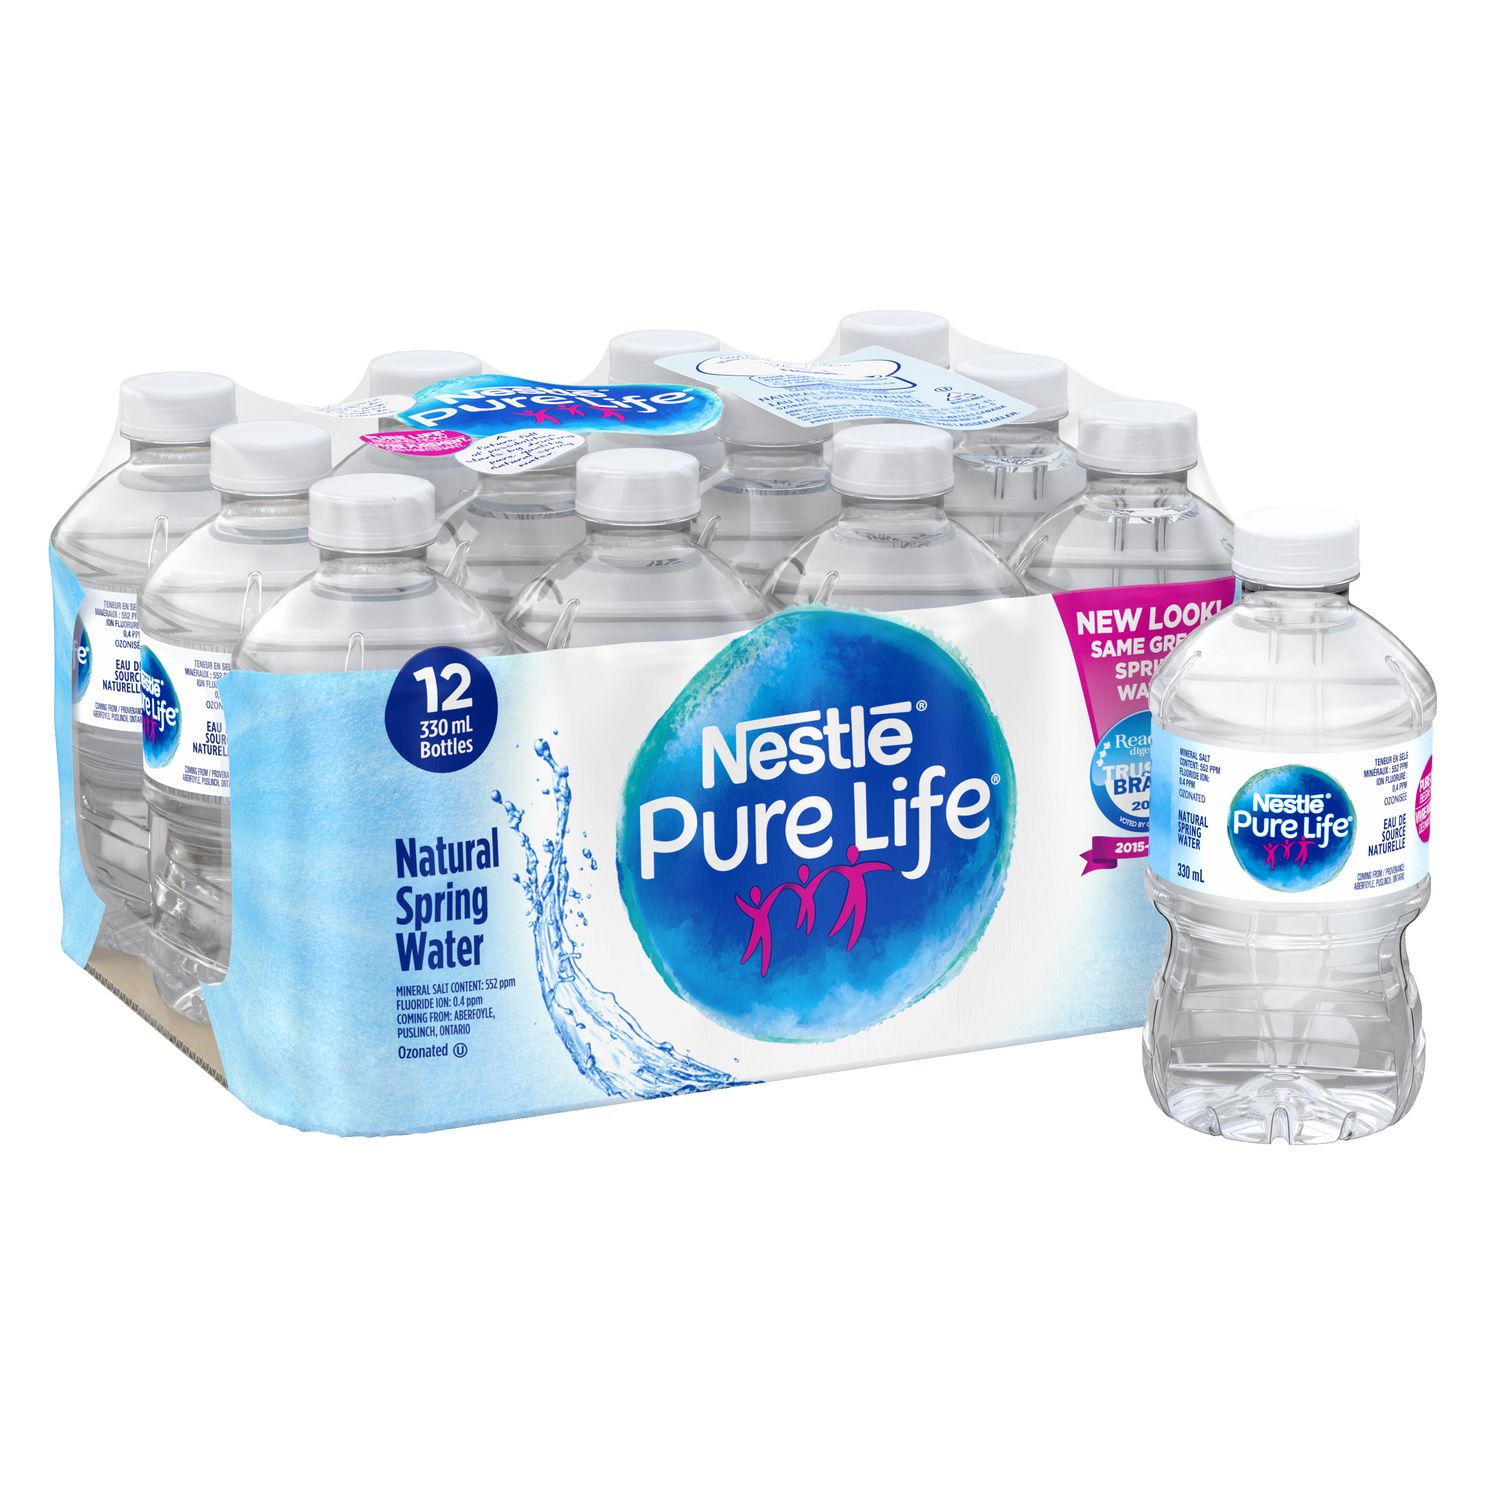 Nestlé Pure Life 100 Natural Spring Water Walmart Canada